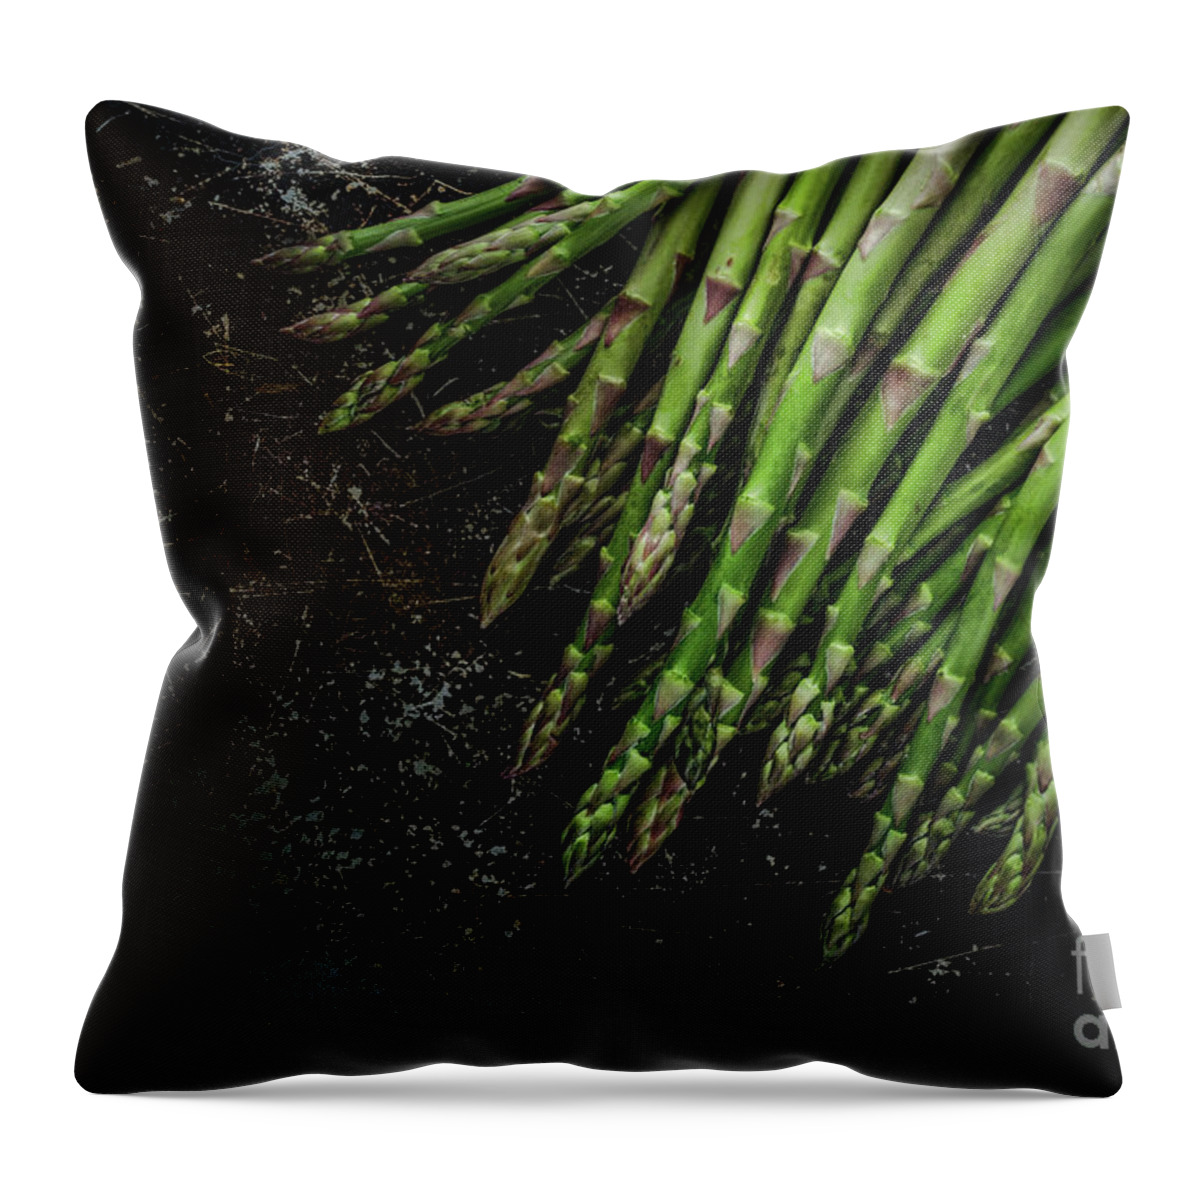 Asparagus Throw Pillow featuring the photograph Asparagus No. 1 by Jarrod Erbe